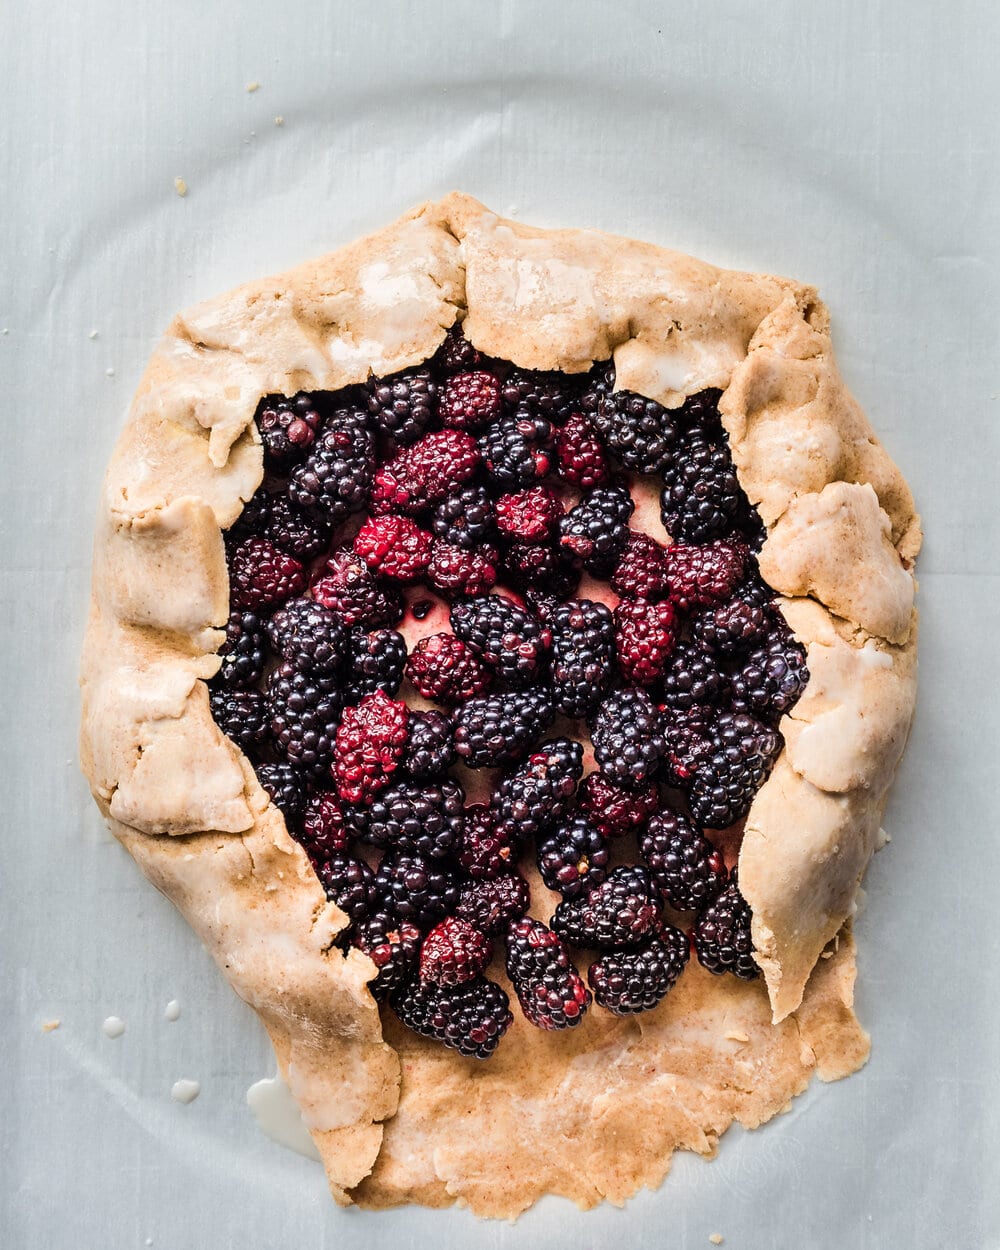 Galette dough folded over three sides of blackberries.